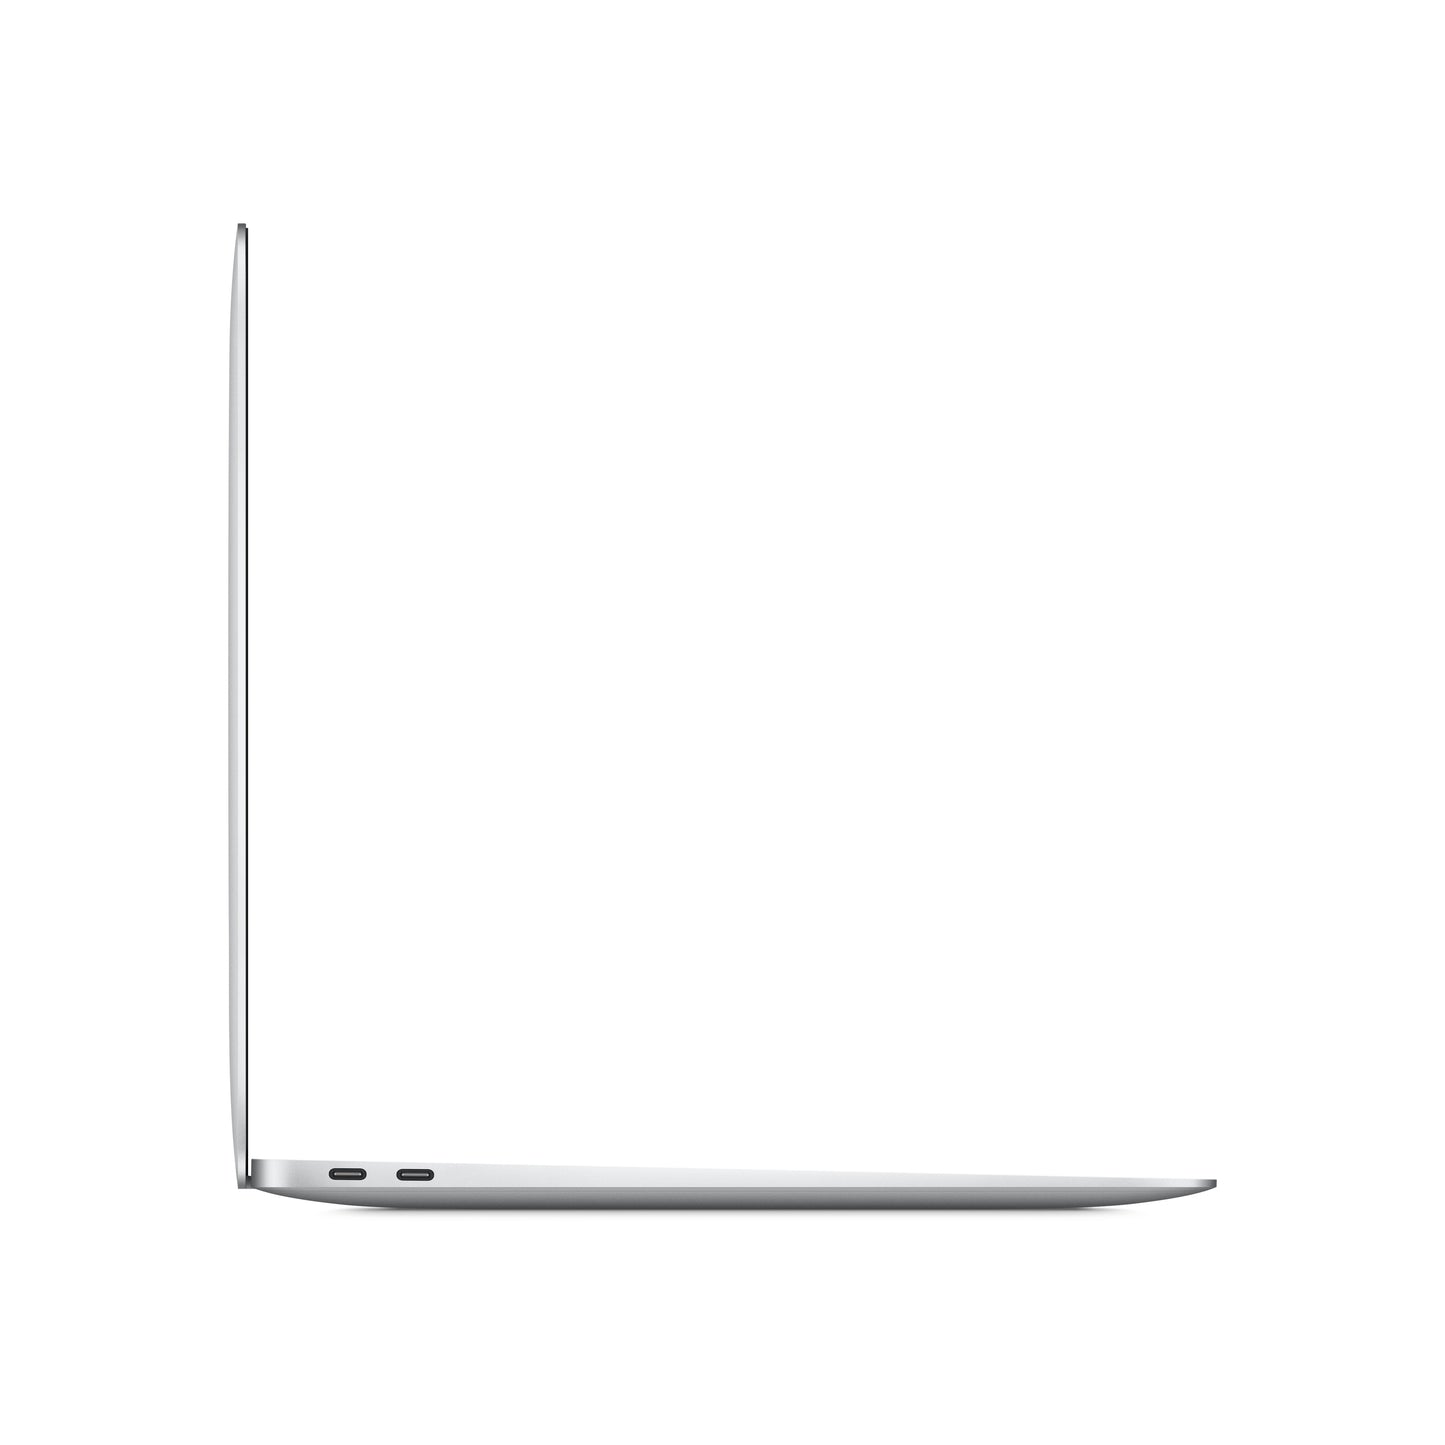 13-inch MacBook Air: Apple M1 chip with 8-core CPU and 7-core GPU, 256GB - Silver